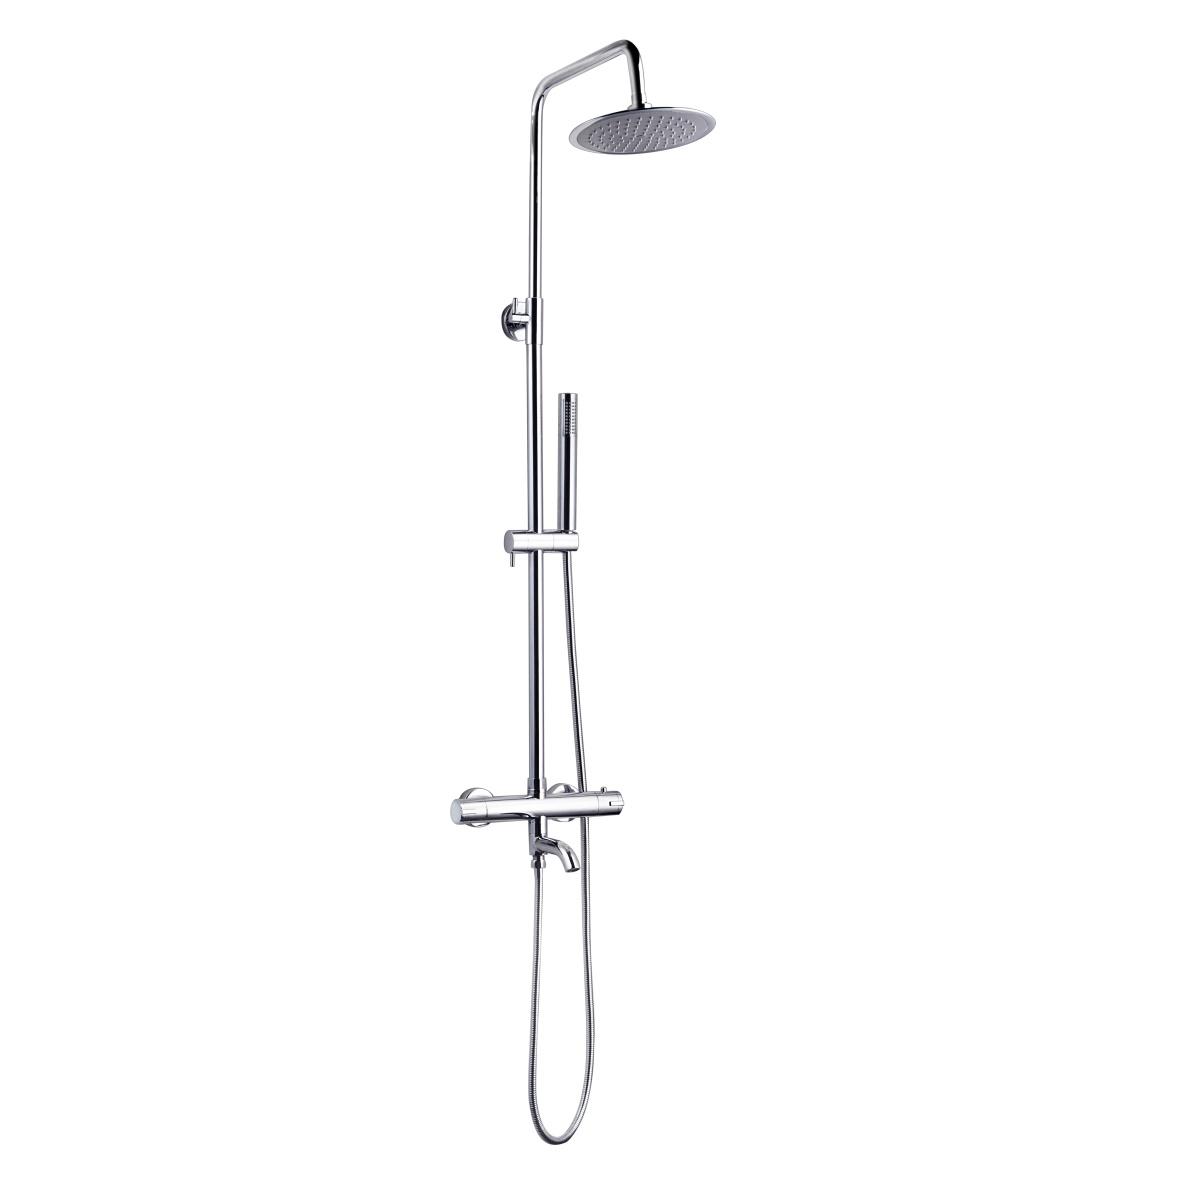 YS34222 Columna de ducha con caño, columna de ducha de lluvia termostática, regulable en altura;